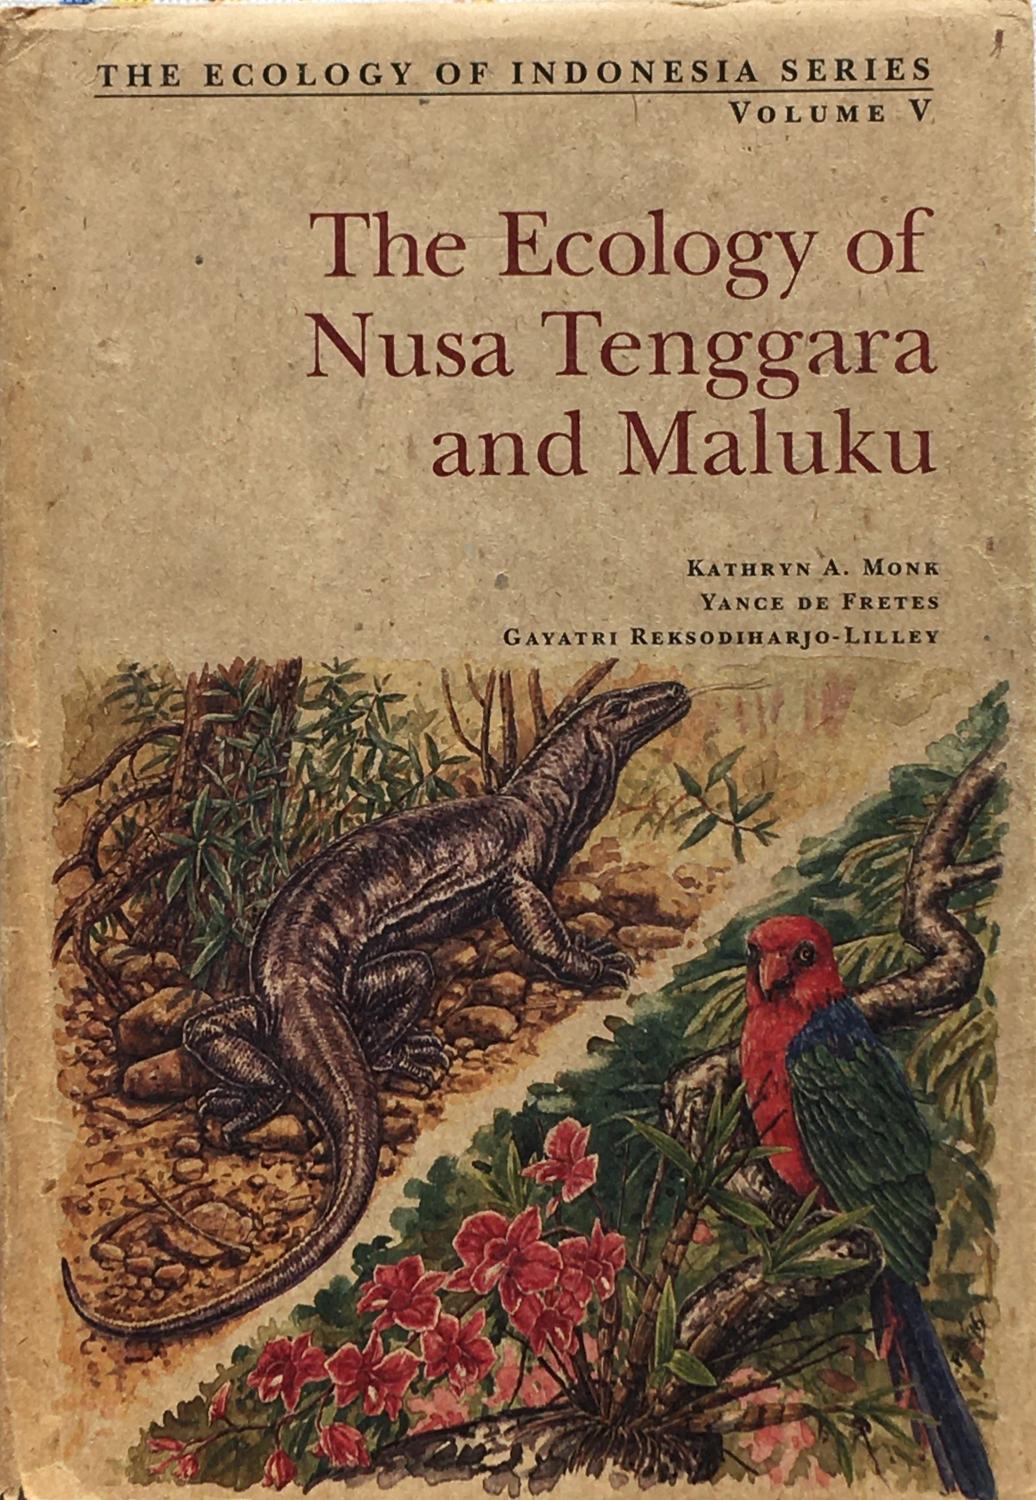 The ecology of Nusa Tenggara and Maluku - Monk, K.A., De Frets, Y. & Reksodiharjo-Lilley, G.